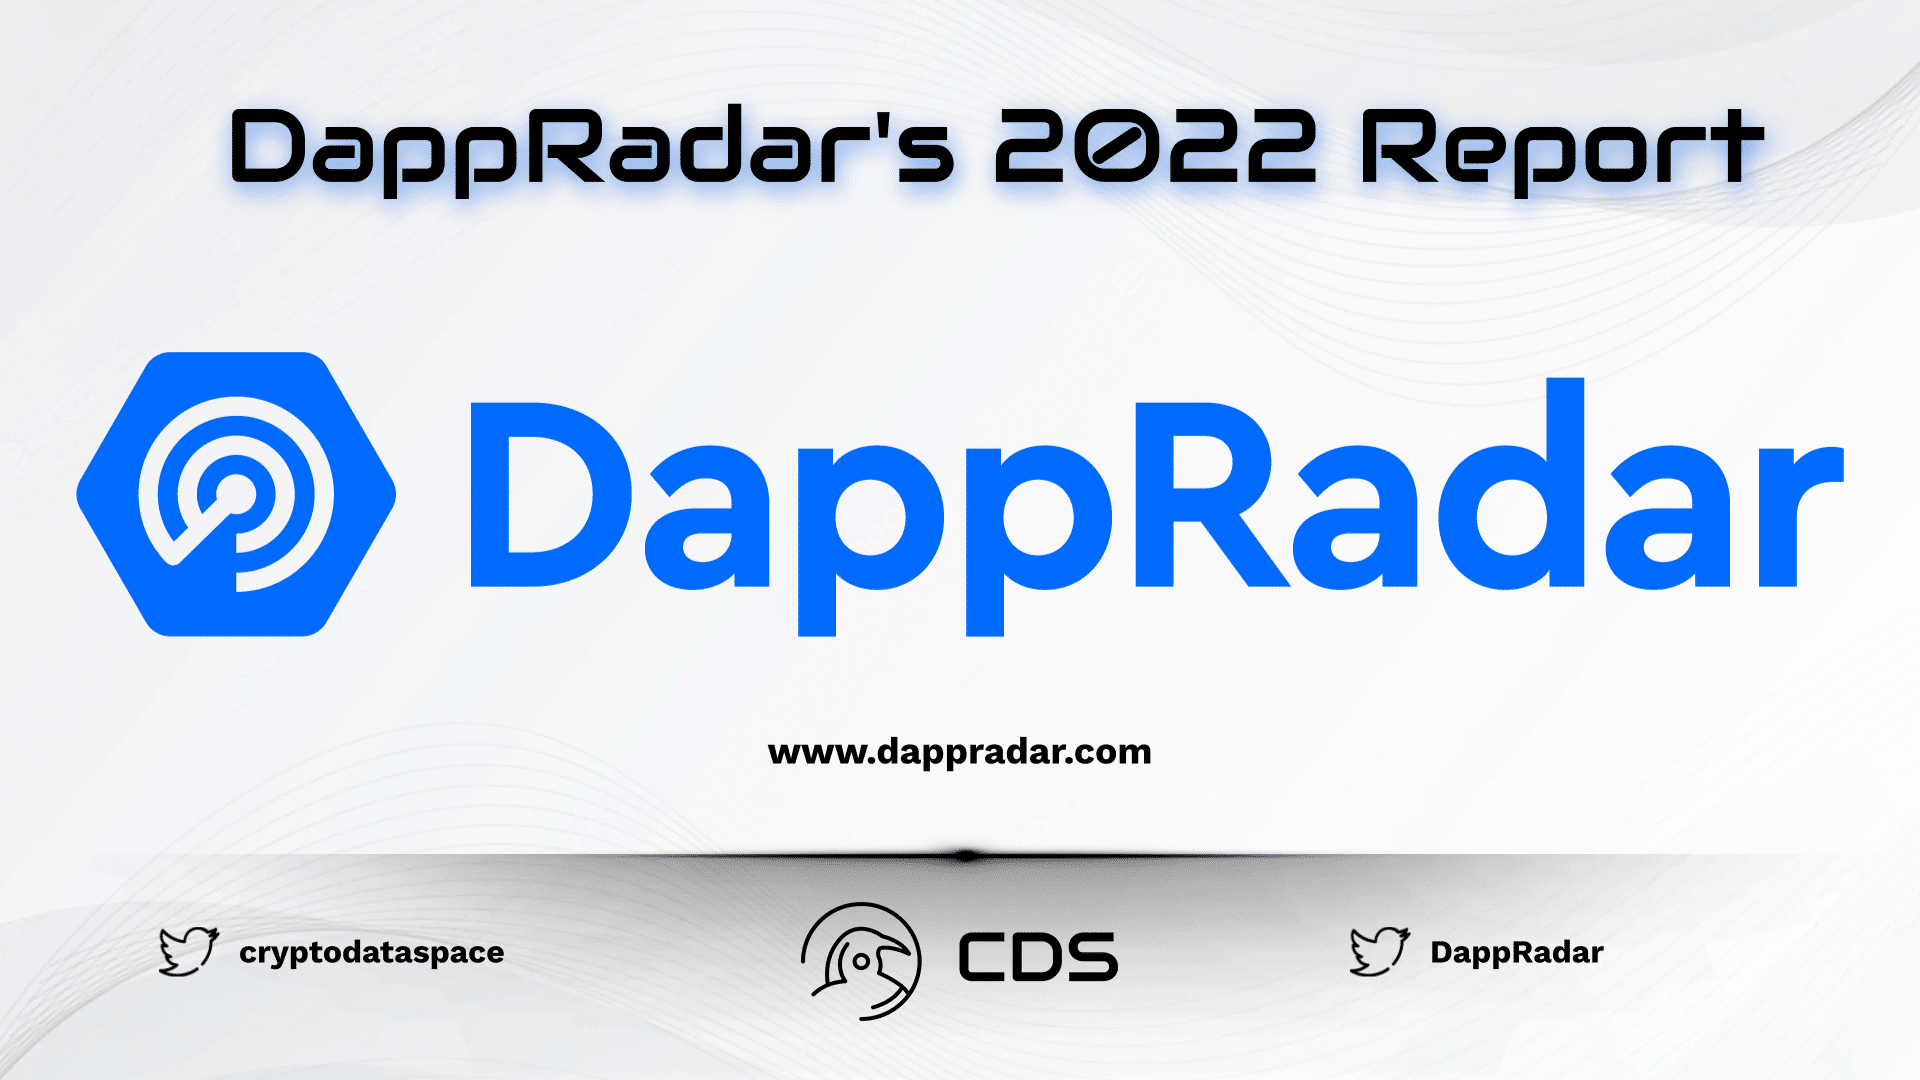 DappRadar's 2022 Report